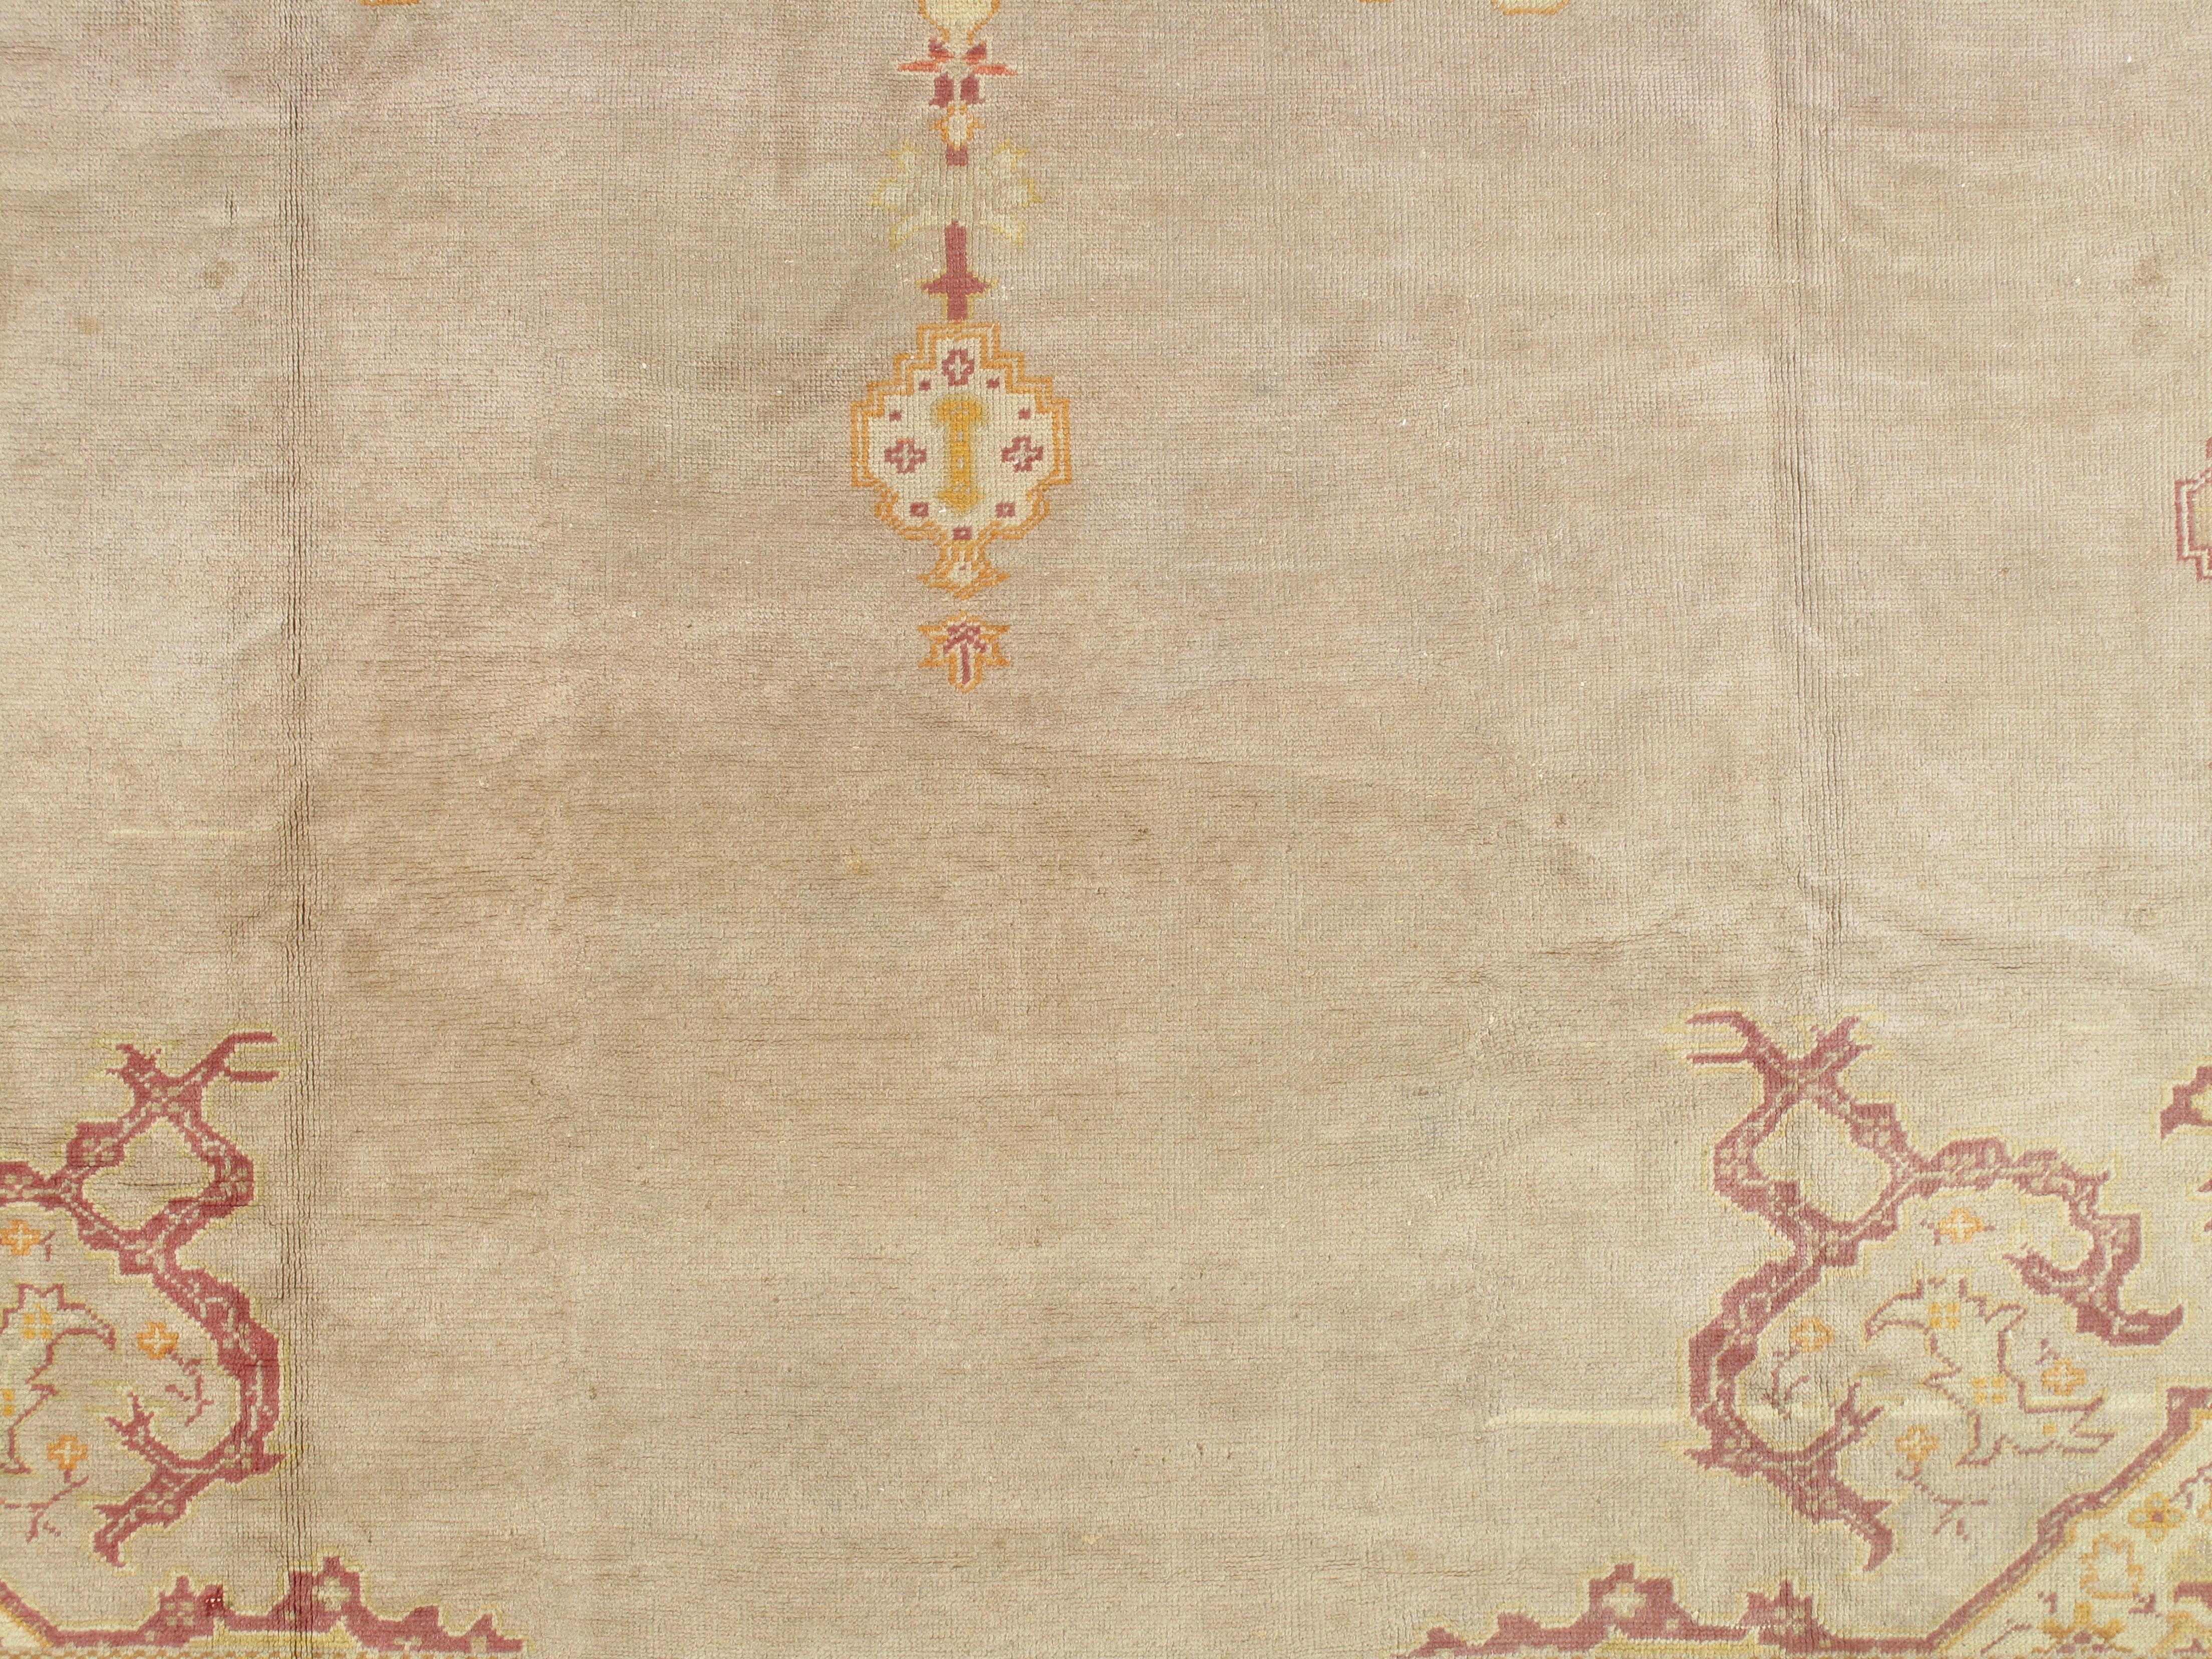 Antique Turkish Oushak Carpet, Handmade Oriental Rug, Gray, Taupe, Saffron Coral 11